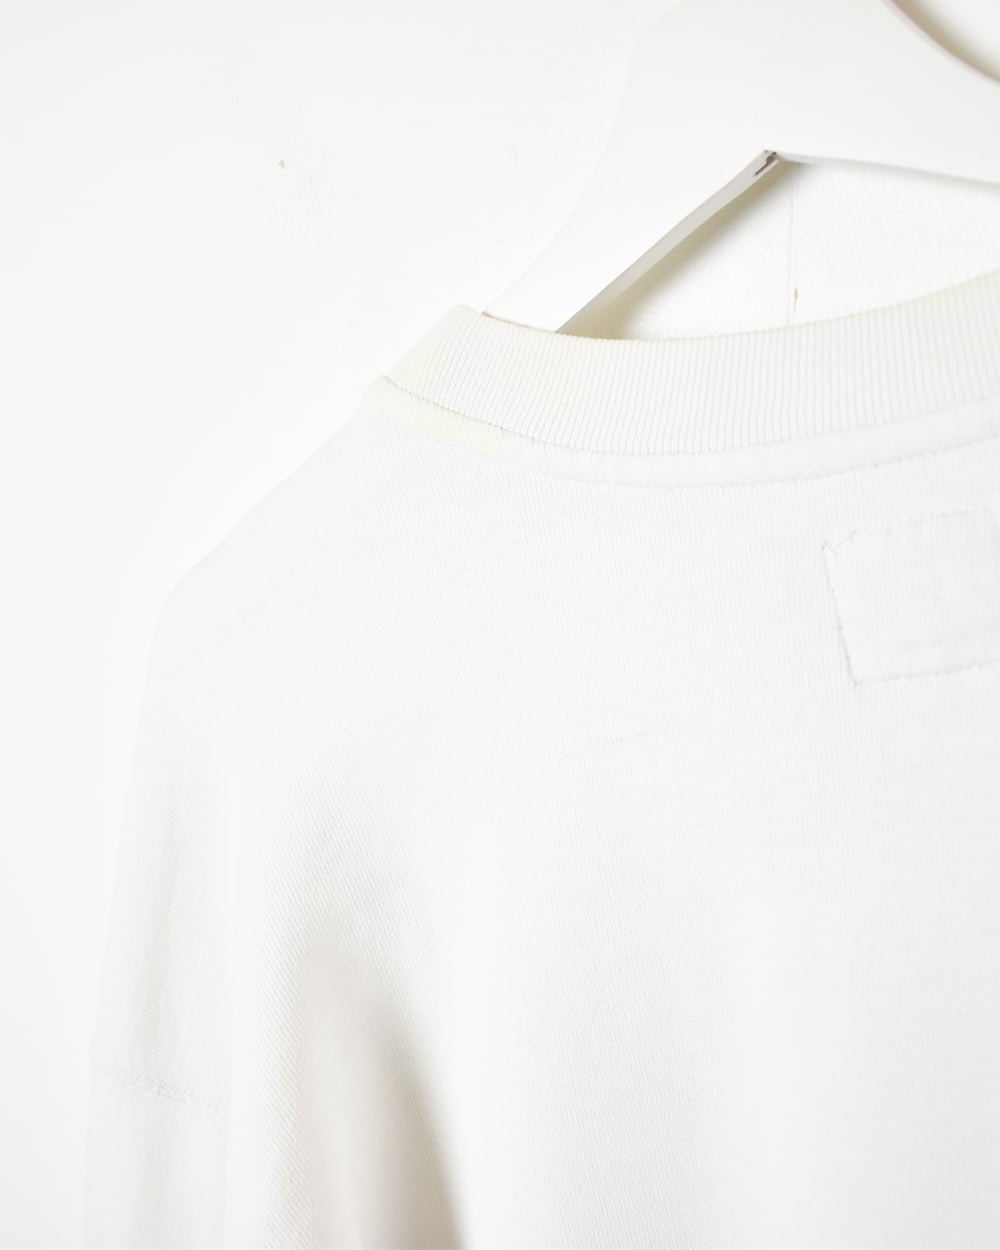 White Nike Sweatshirt - X-Large